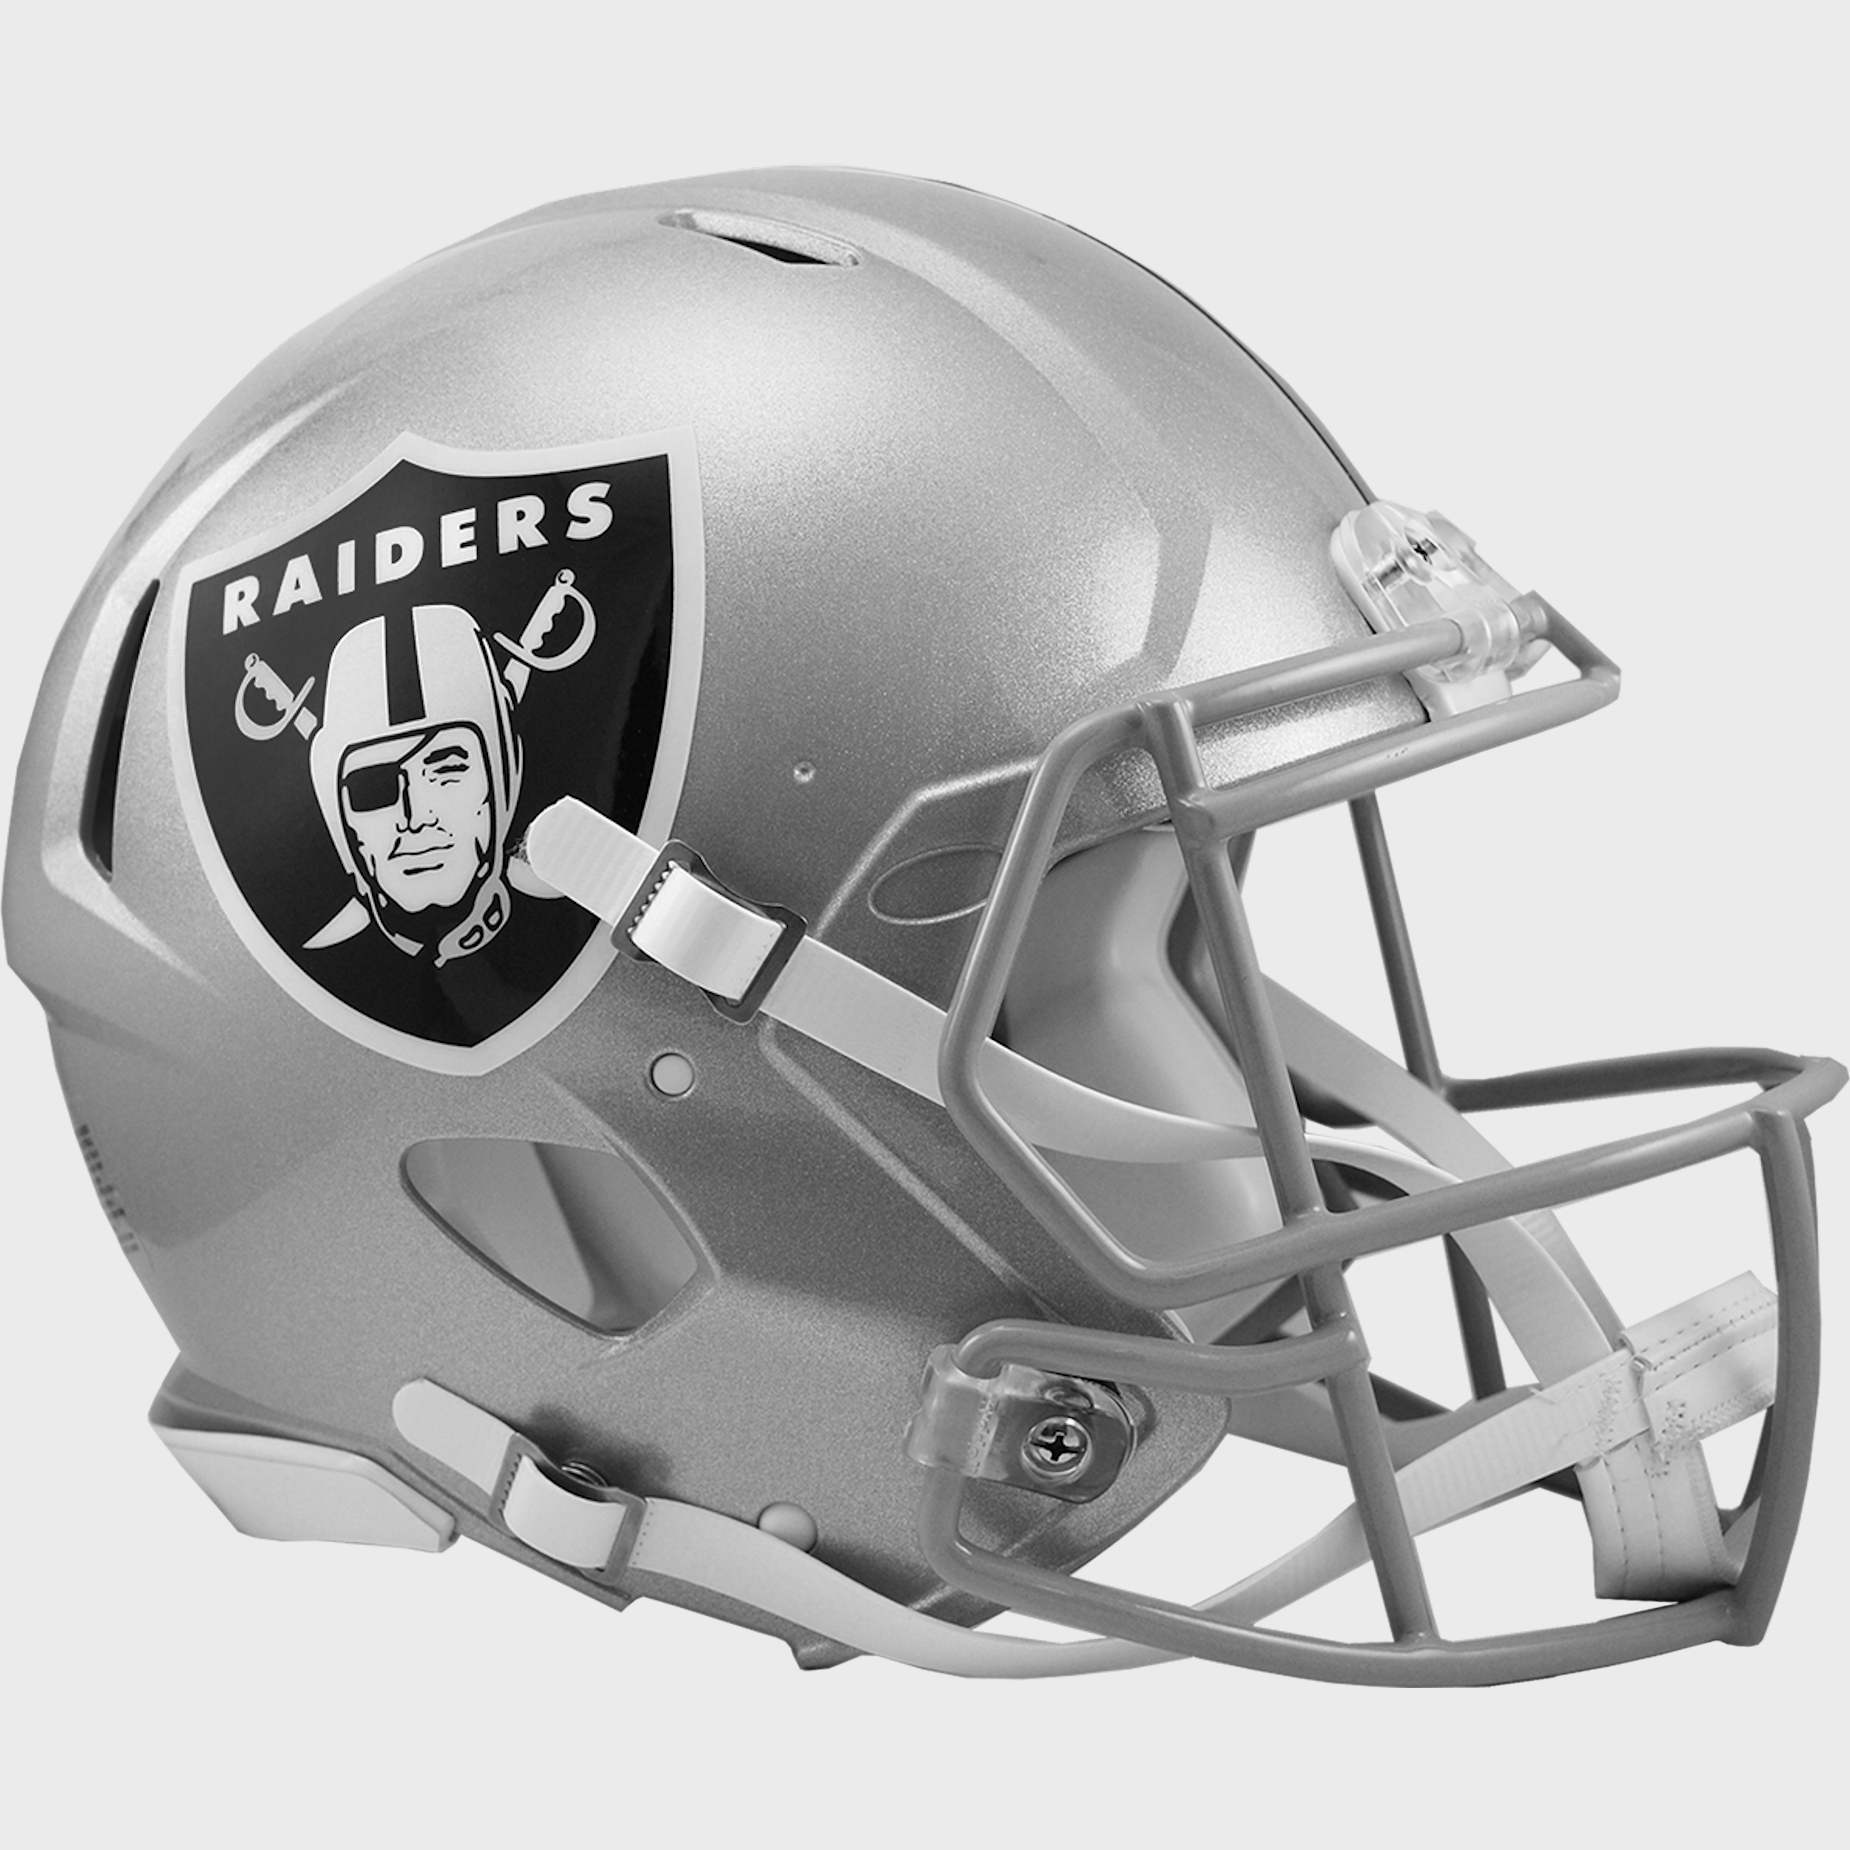 Las Vegas Raiders authentic full size helmet